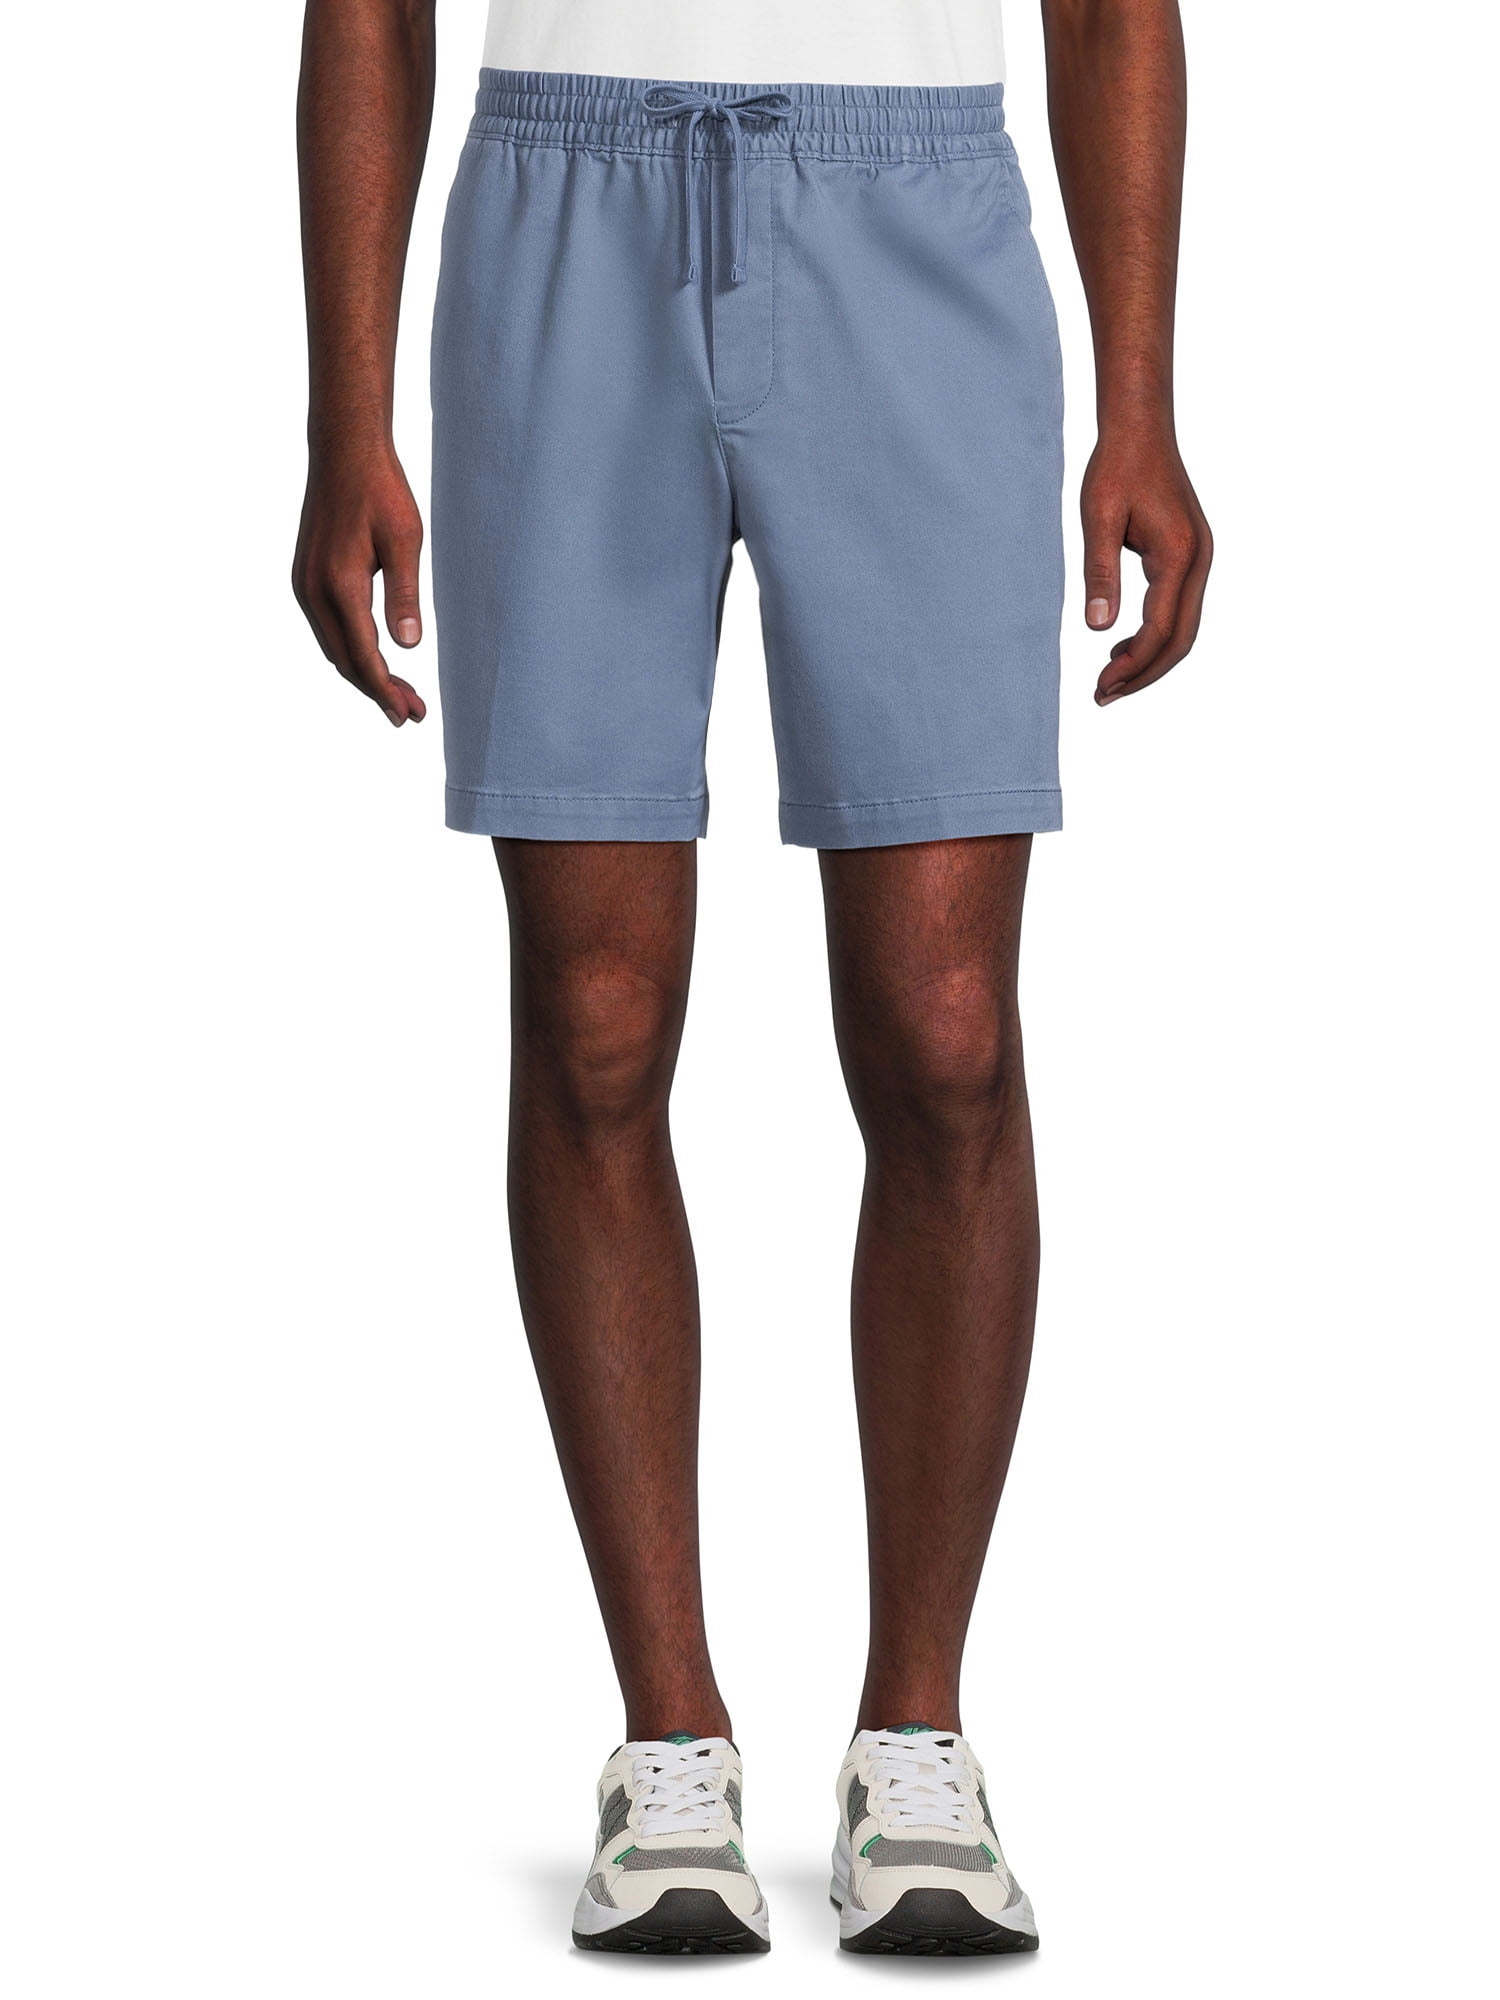 George Men's and Big Men's Twill Pull-On Shorts, Sizes S-2XL - Walmart.com